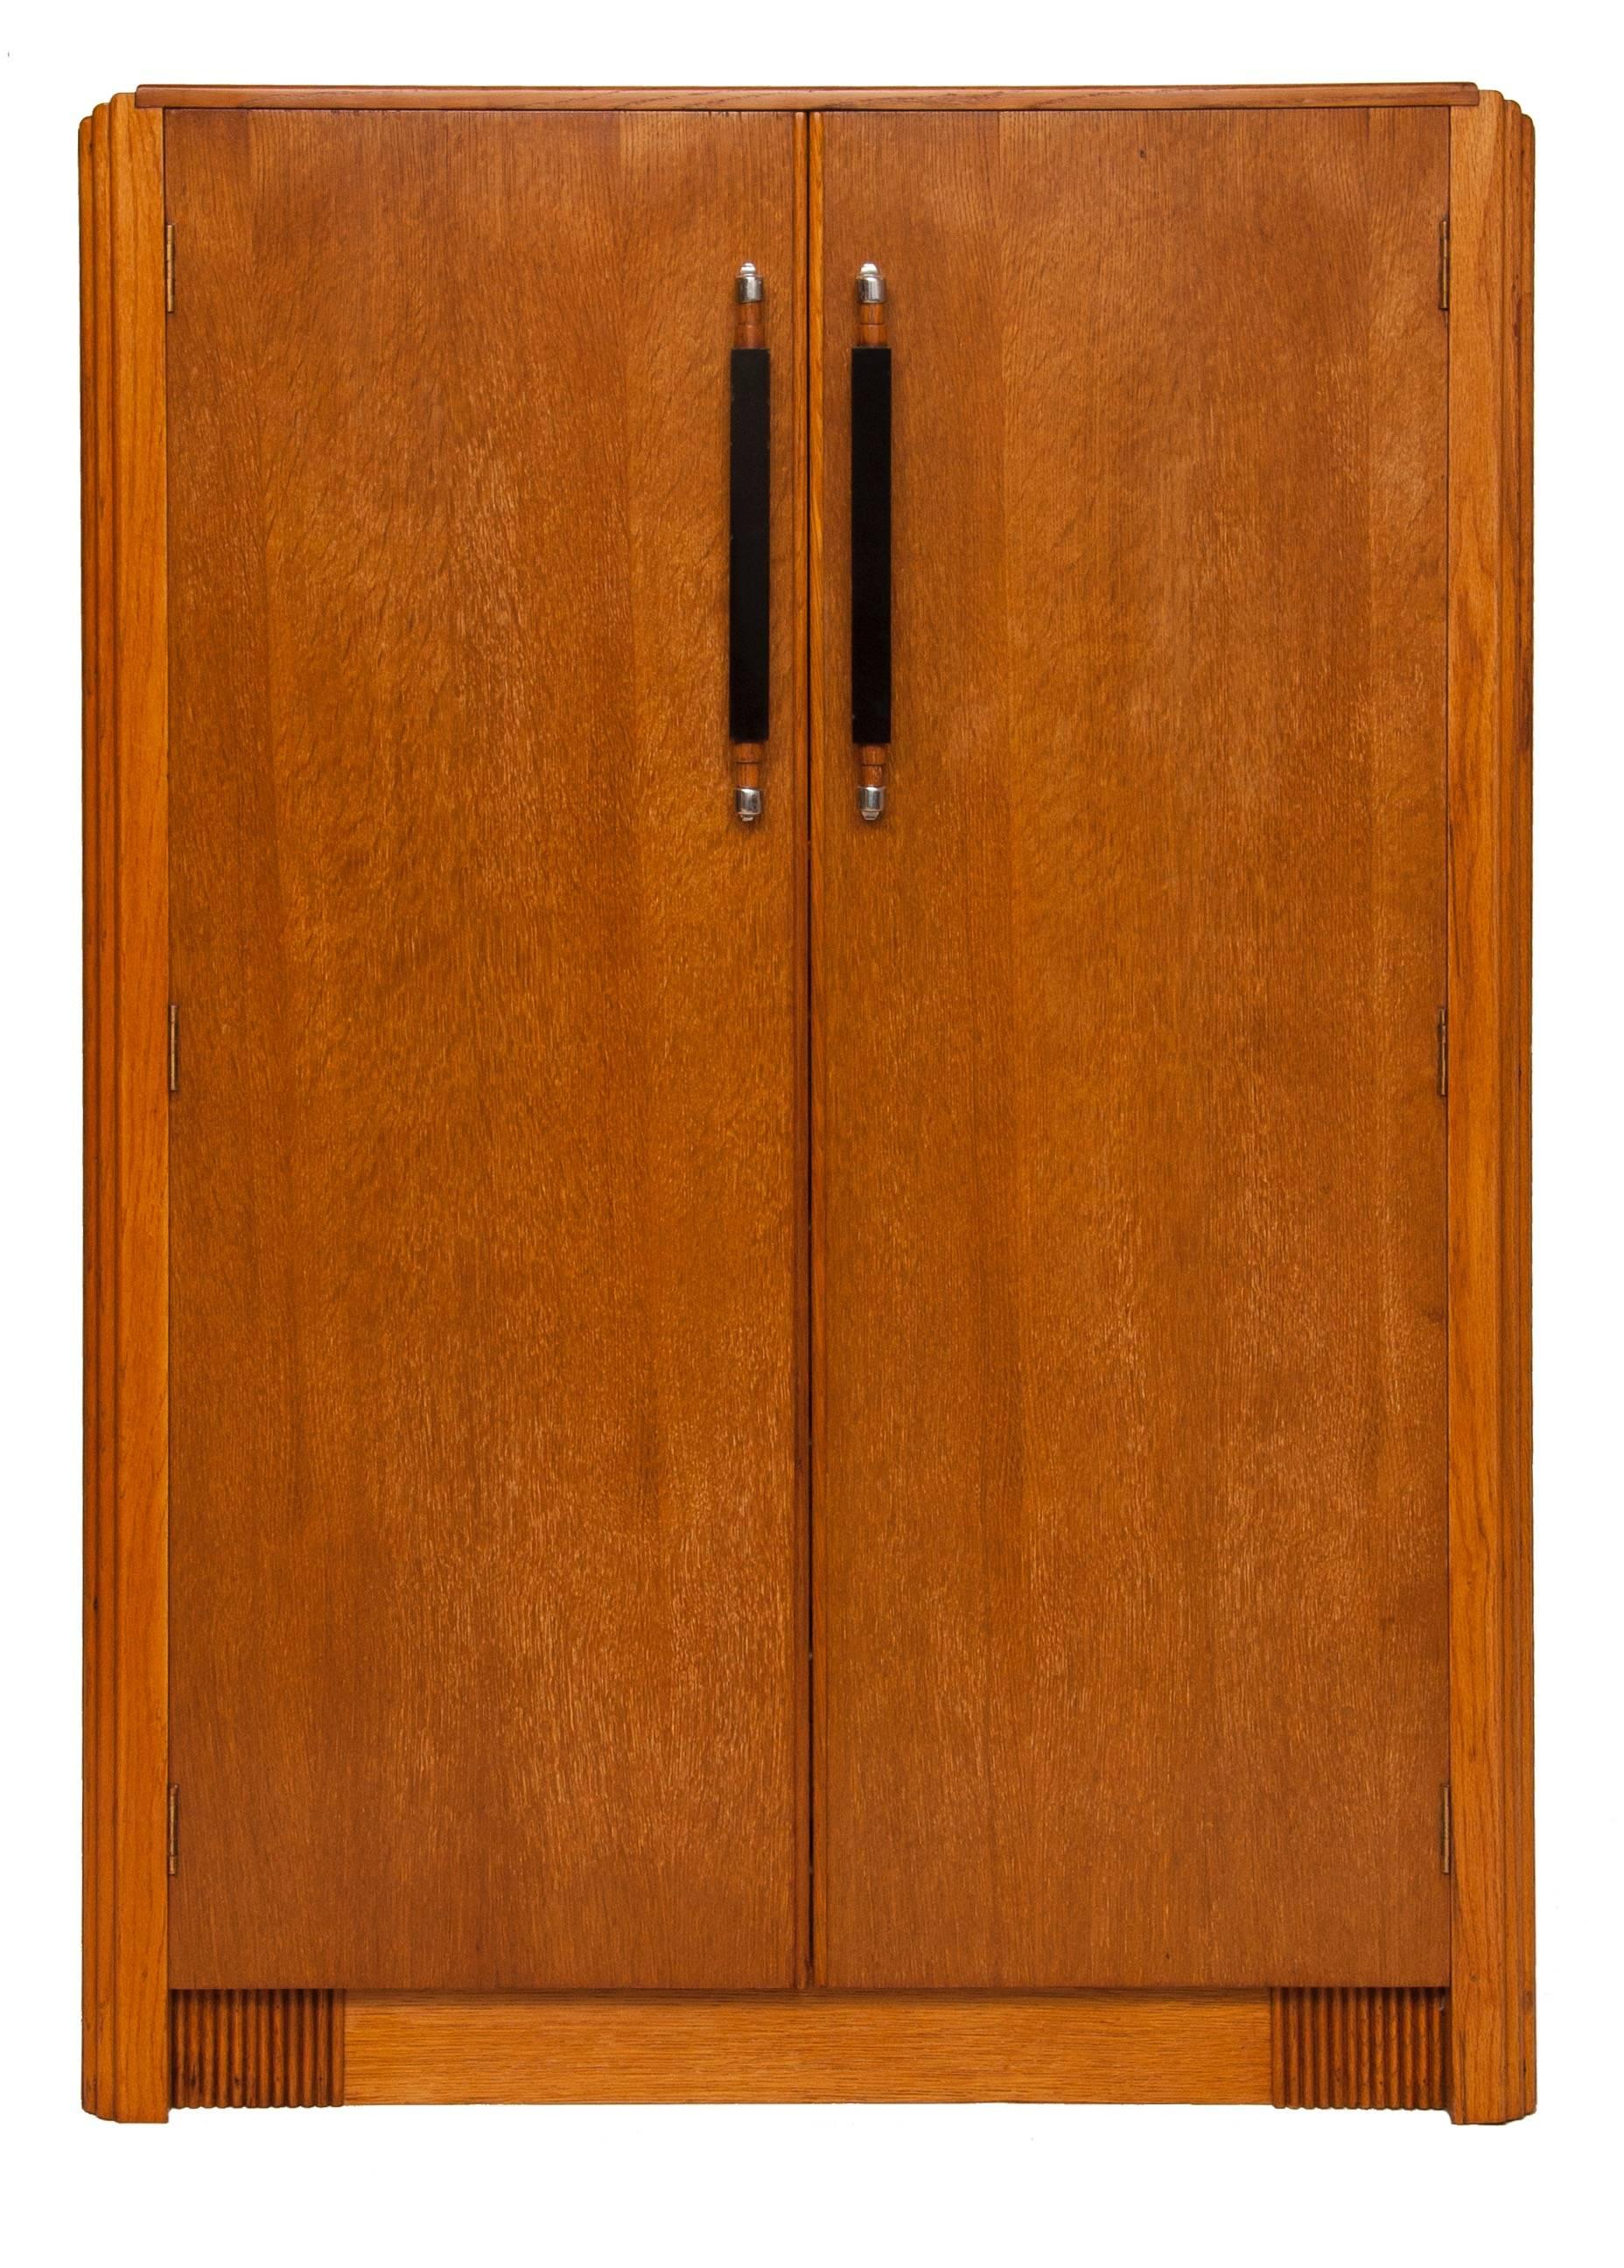 Art Deco linen press, beautiful golden oak linen press, single shelf over five drawers.
Stylized black bakelite handles with chrome,
British, circa 1930
Measures: H 122 cm, W 84 cm, D 49 cm.